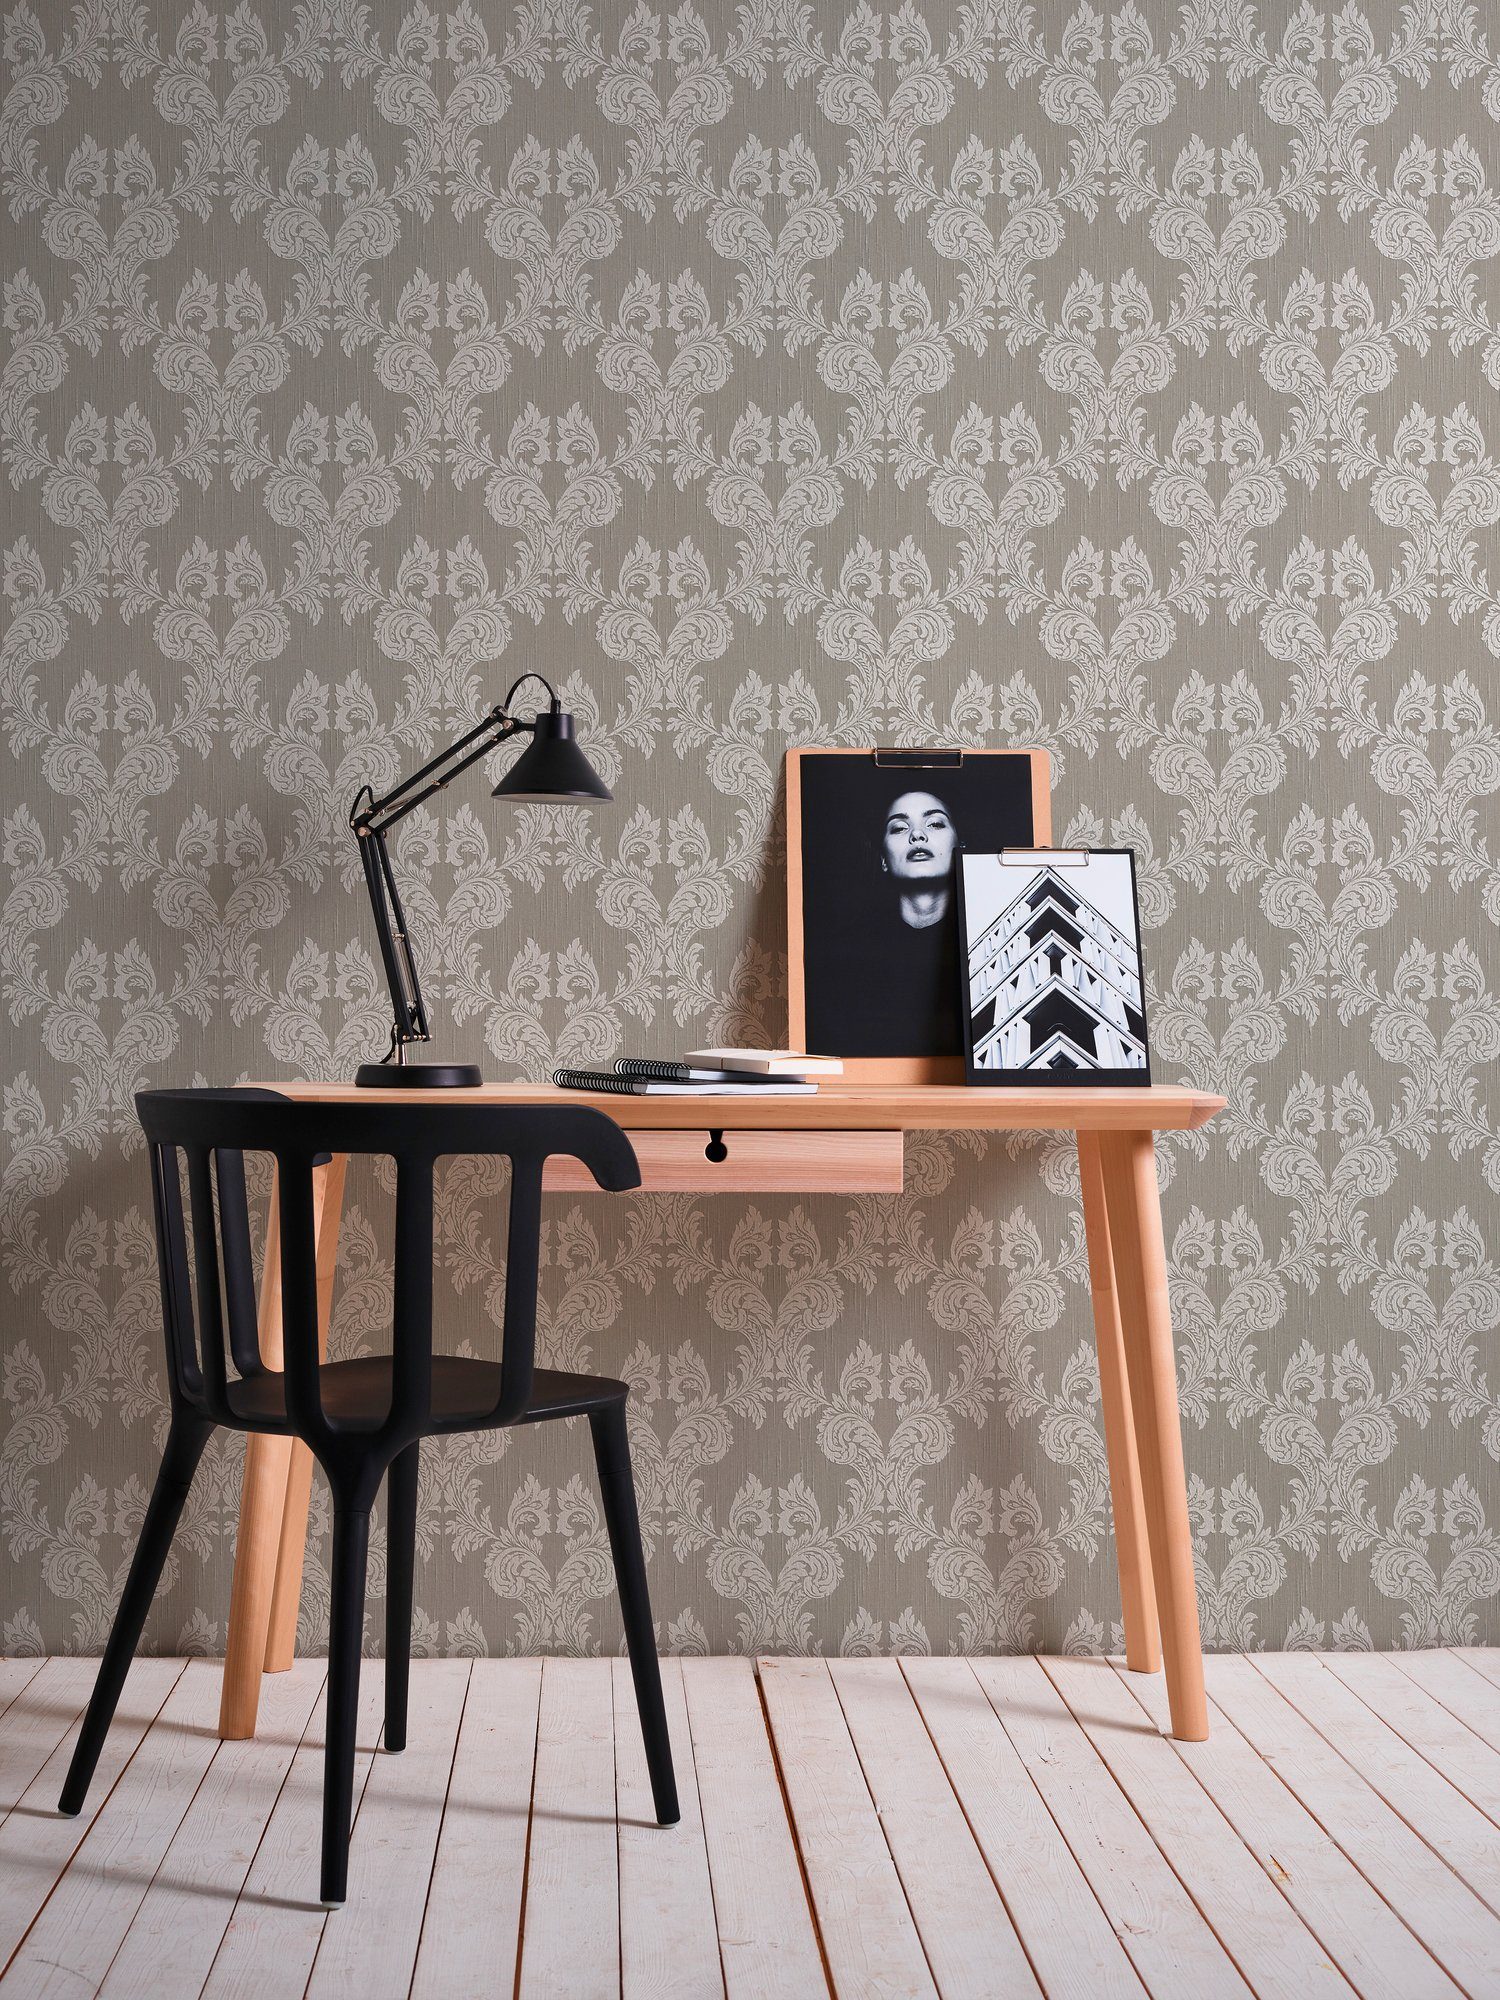 Paper samtig, Tessuto, Barock, floral, Création A.S. Barock Tapete grau/beige Textiltapete Architects